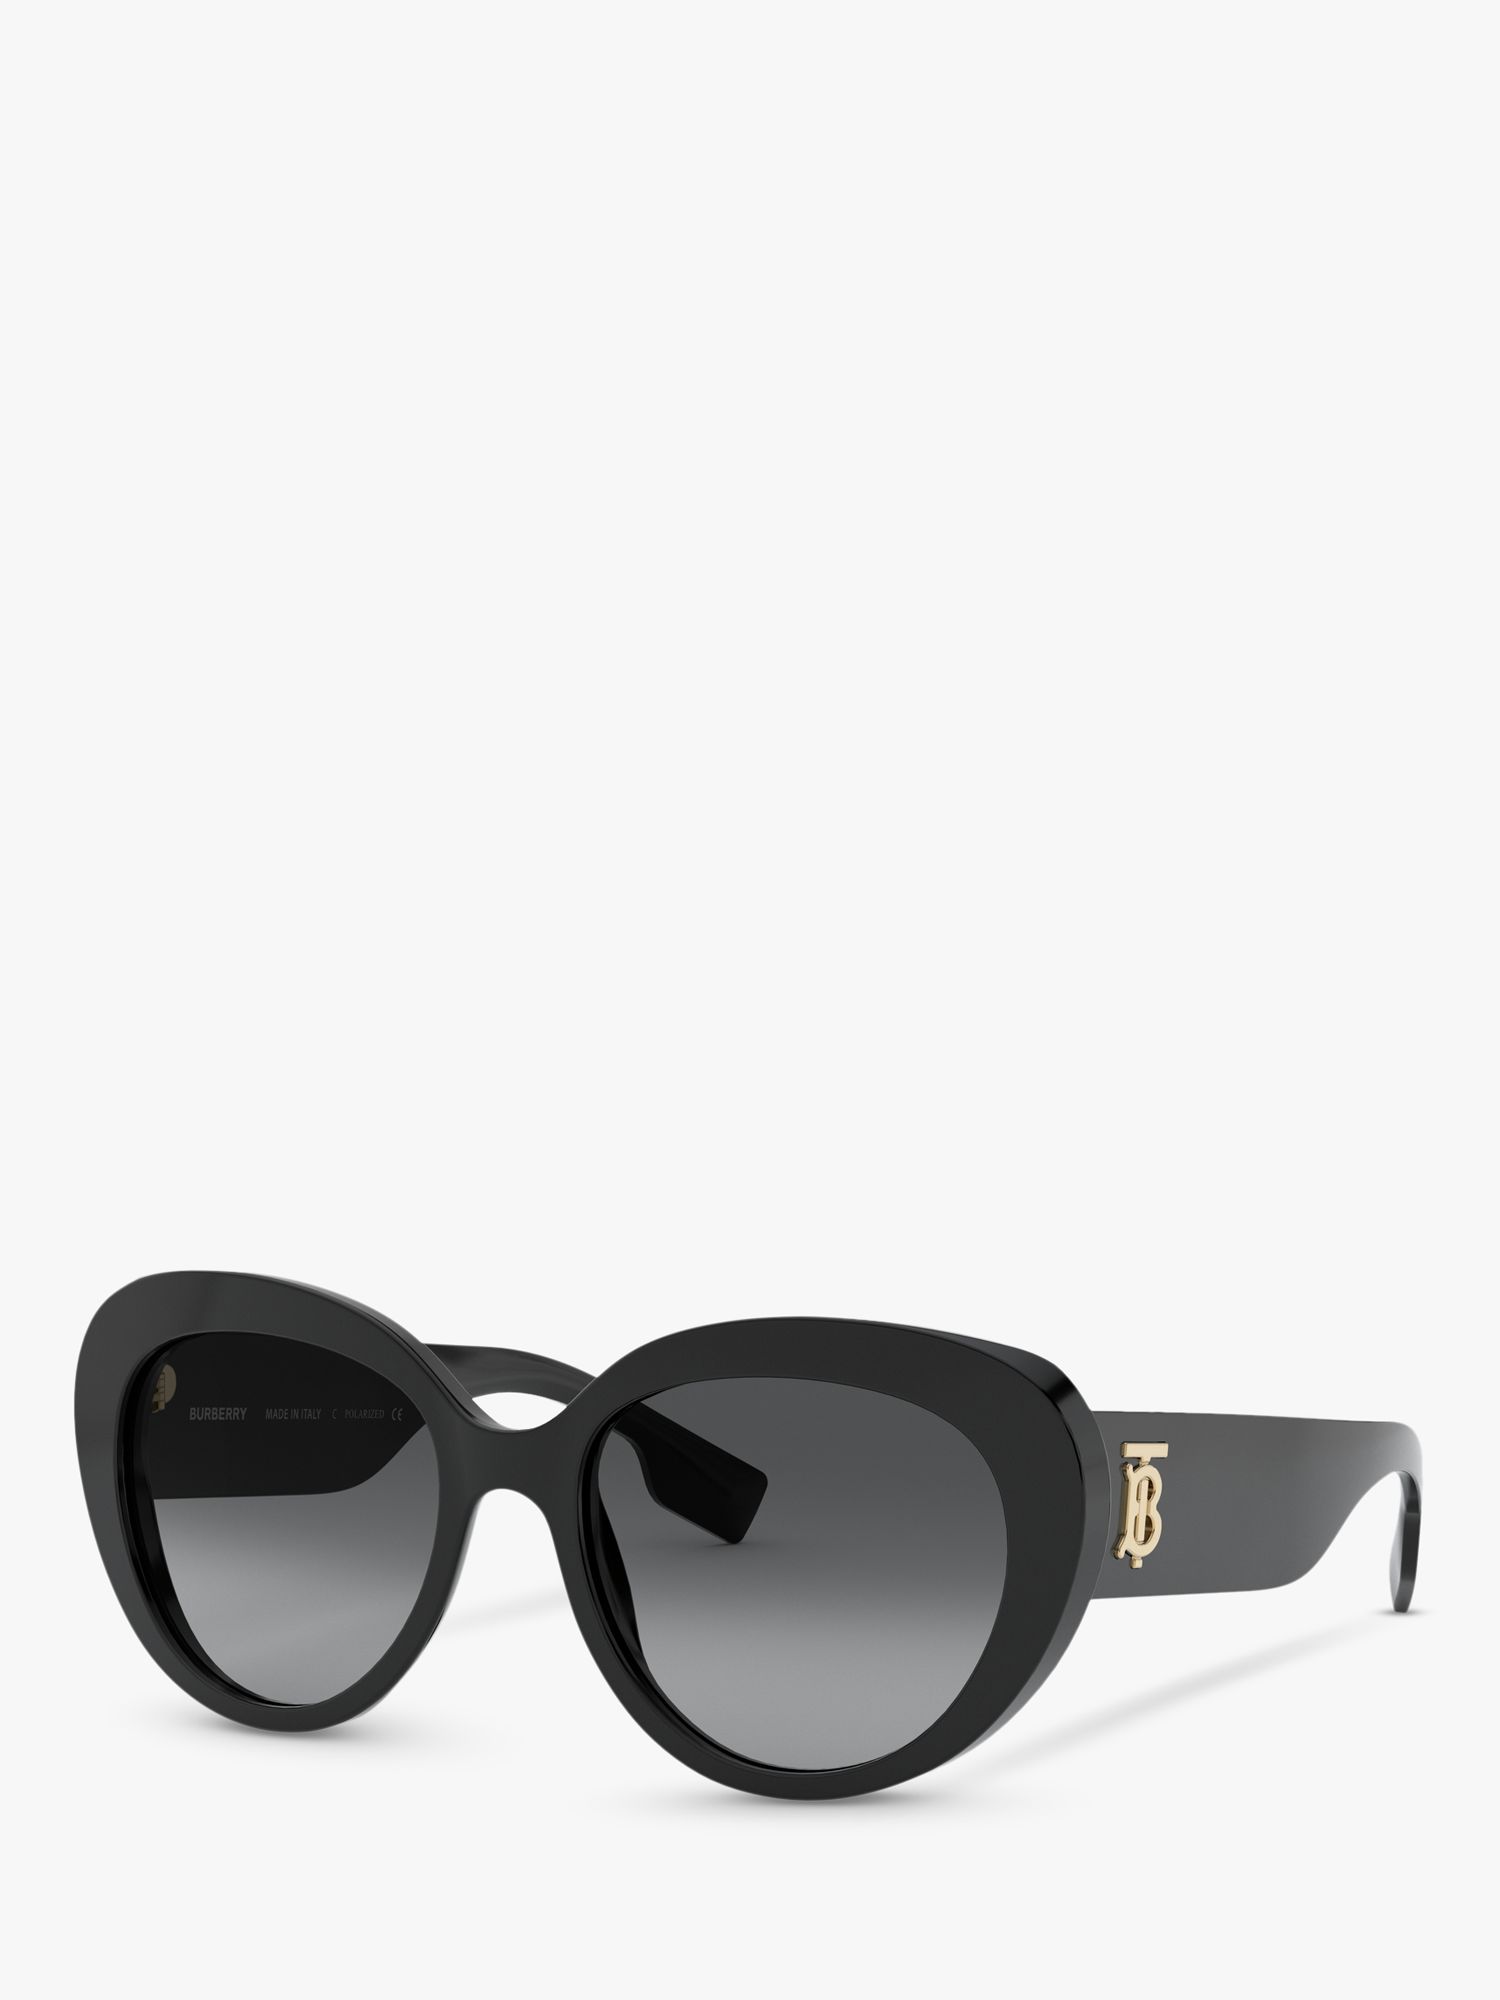 burberry women's cat eye sunglasses